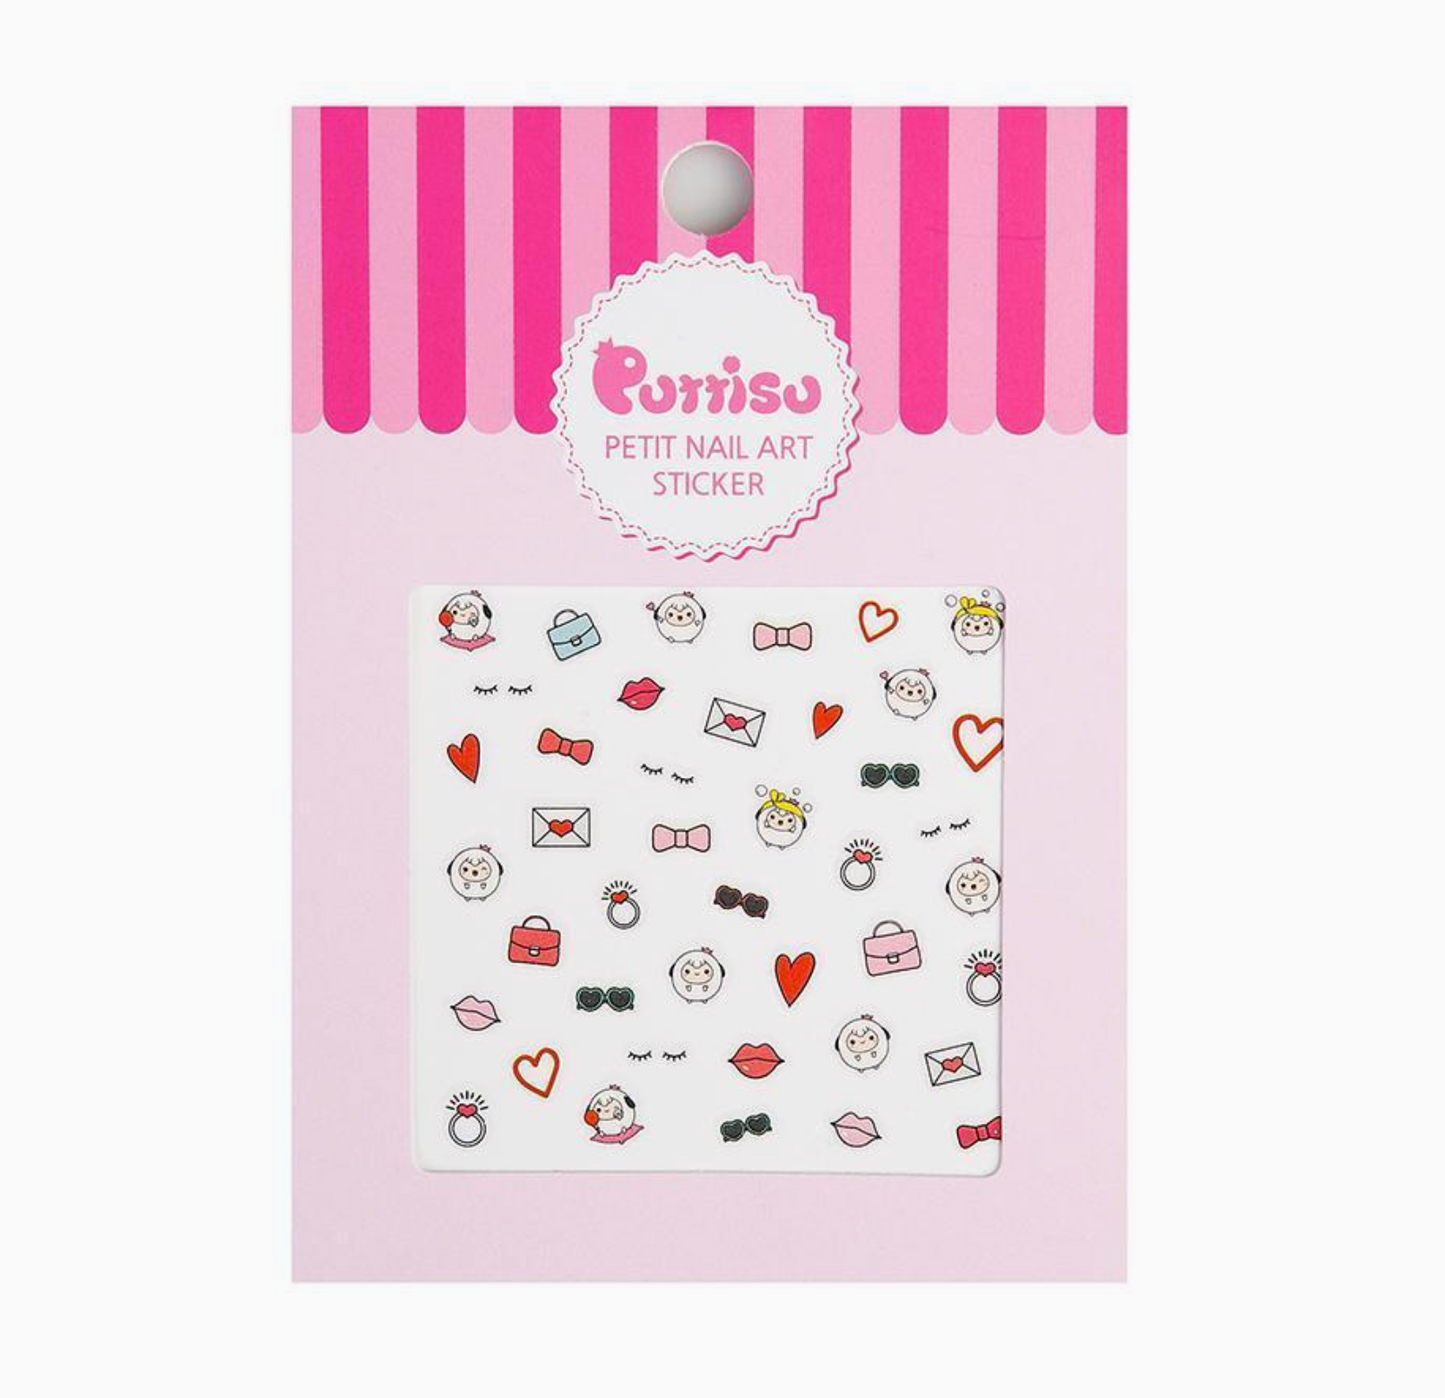 Puttisu Petit Nail Art Sticker - 03 Bling Bling